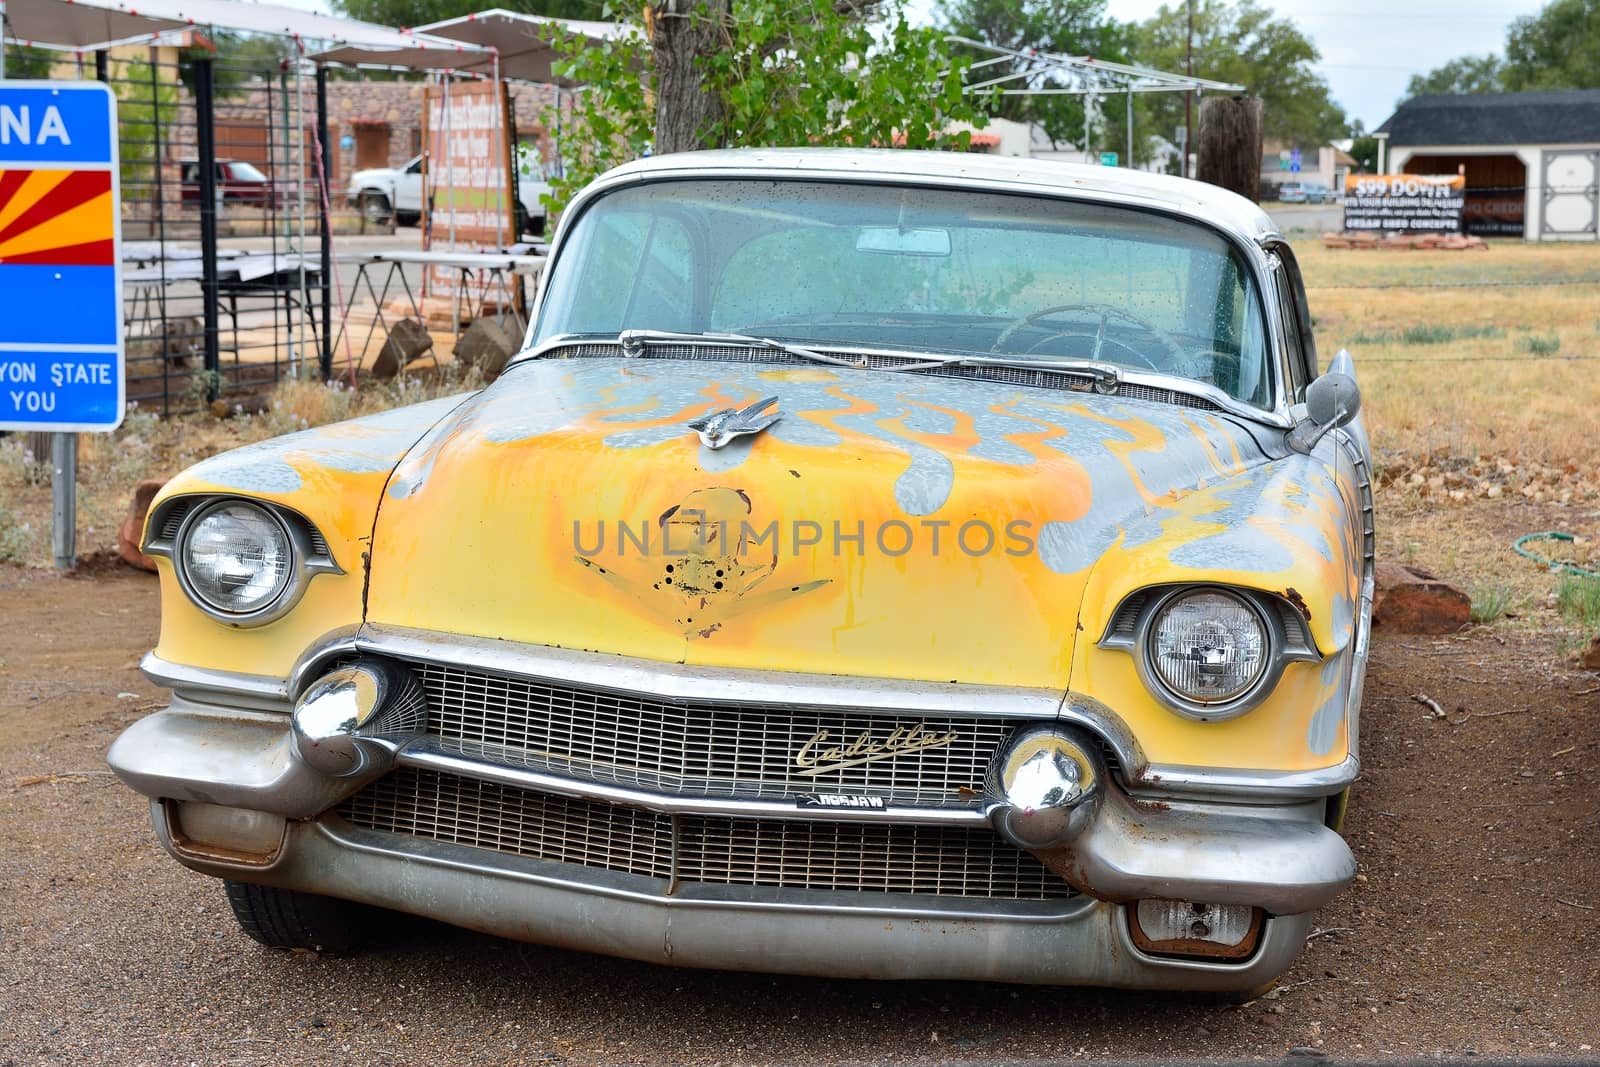 Rusty abandoned Cadillac car. by CreativePhotoSpain